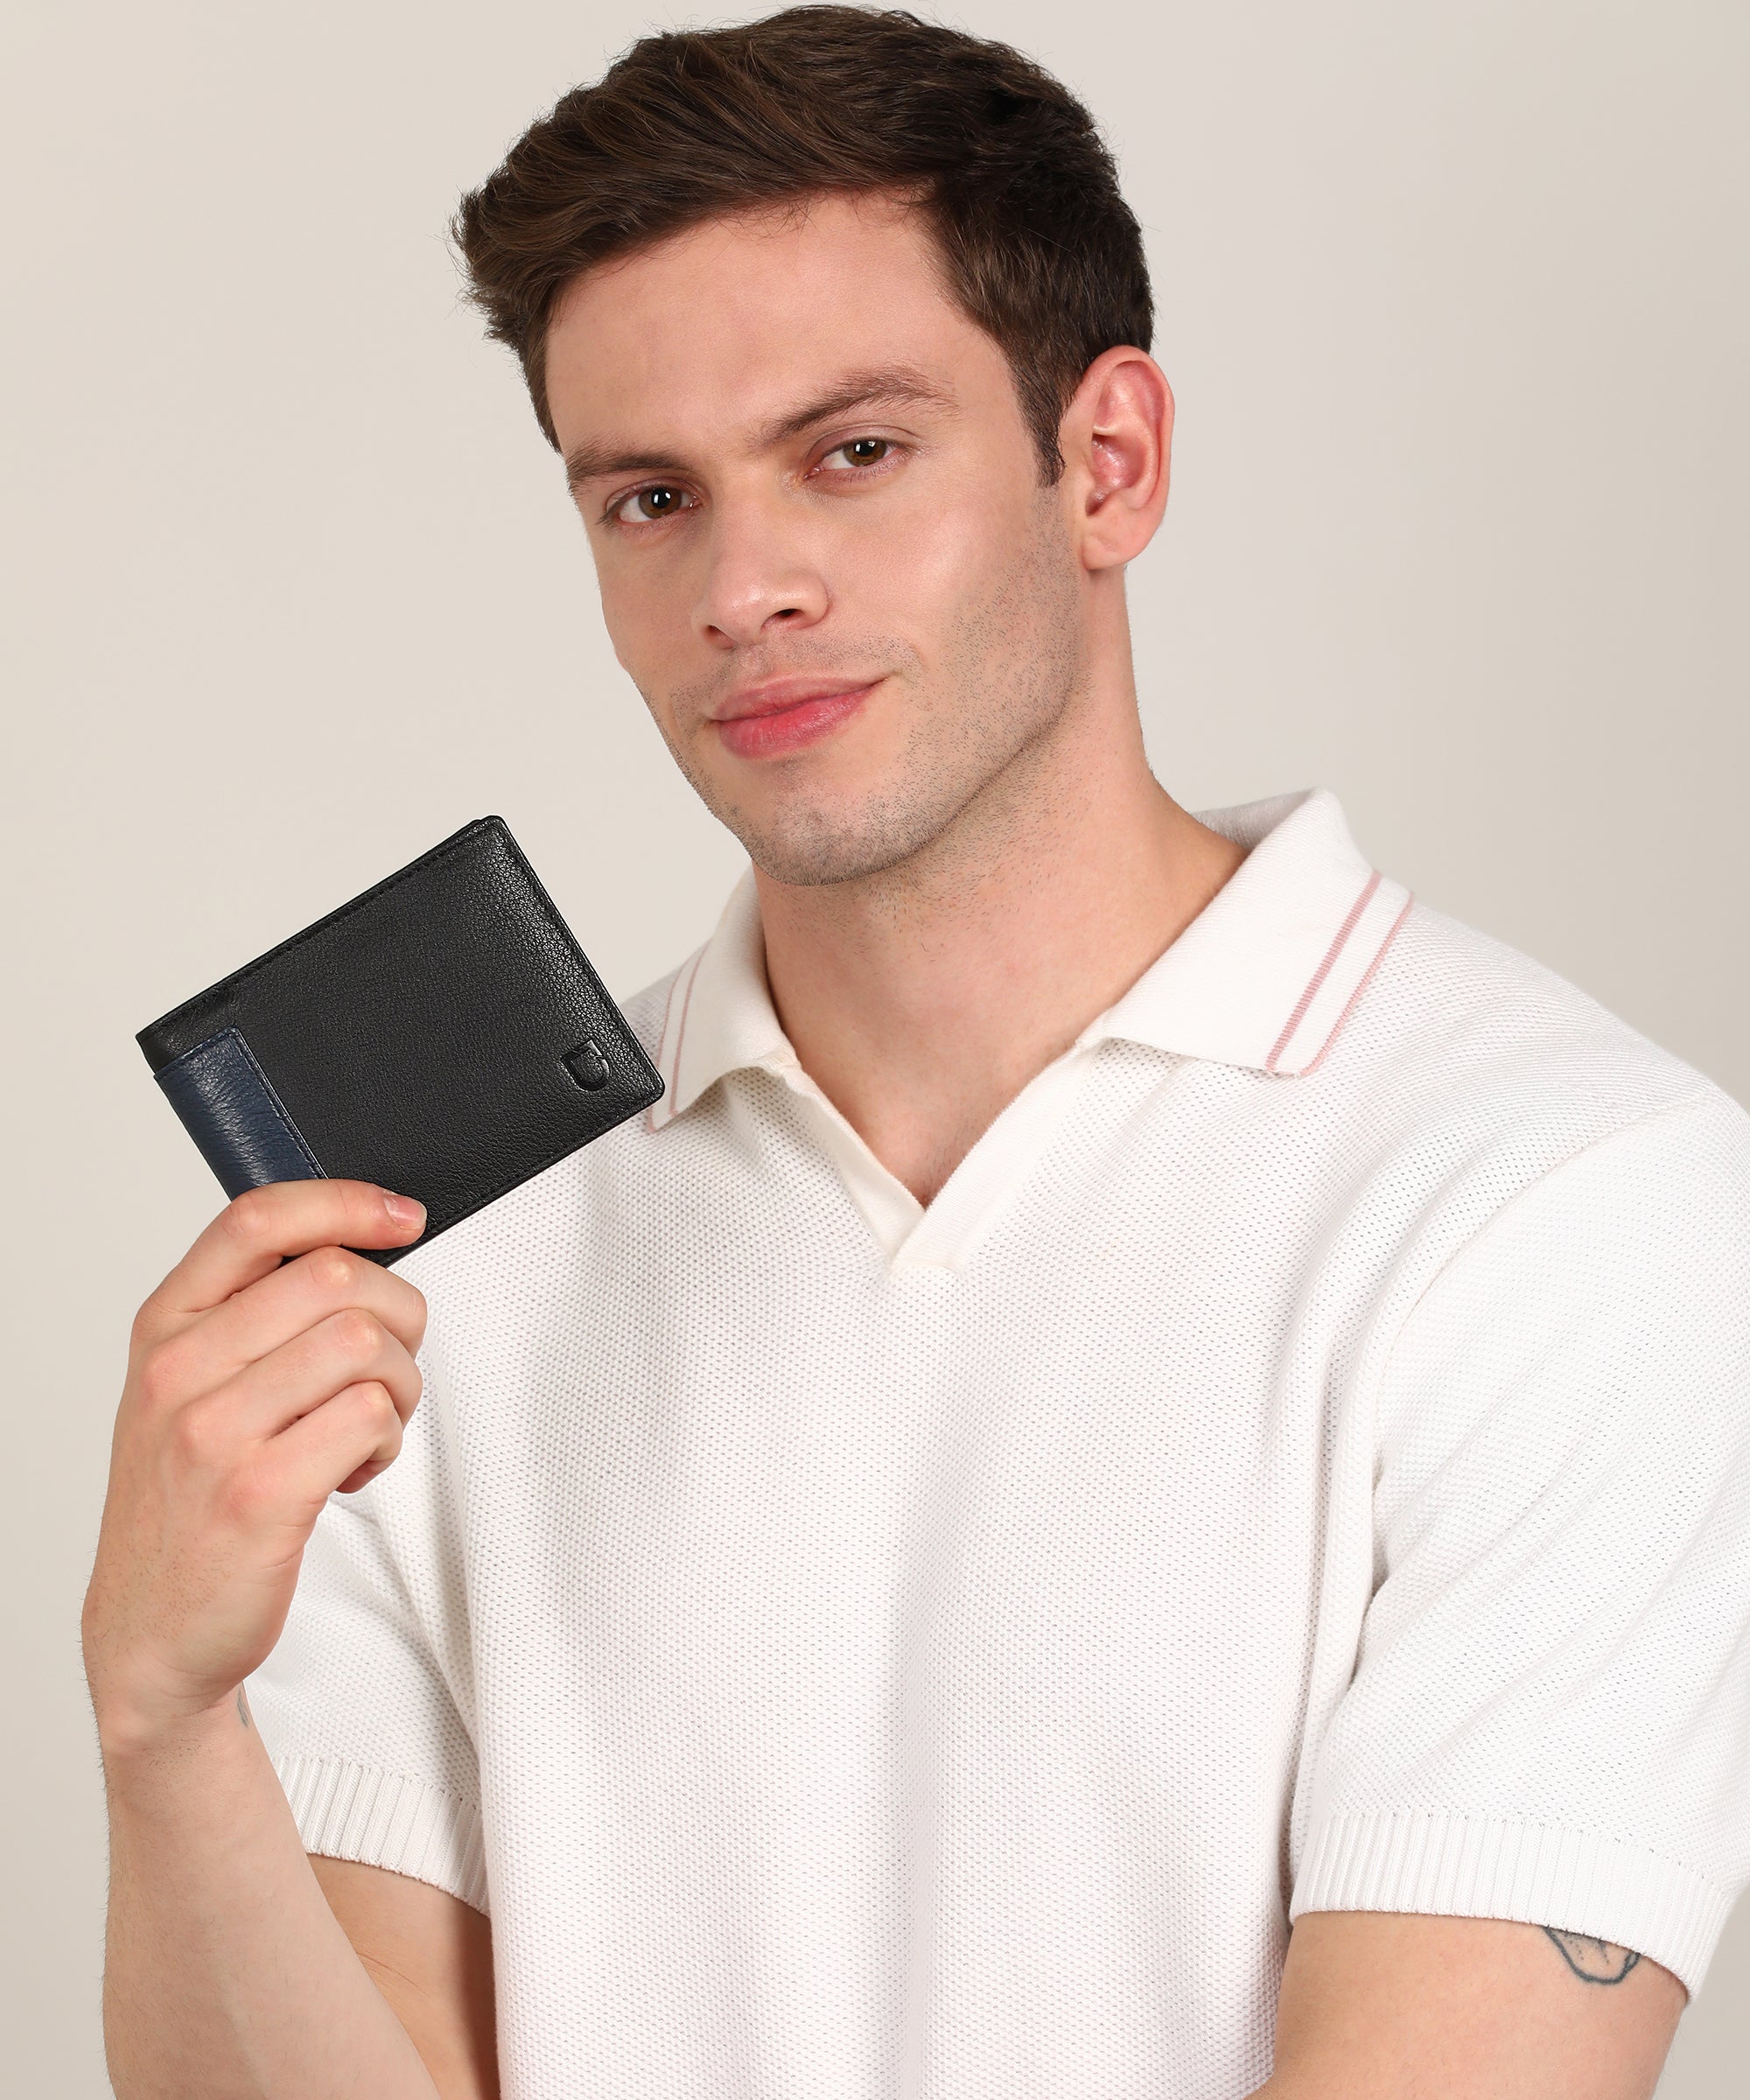 Urbano Fashion Men's Casual, Formal Black Genuine Leather Wallet-8 Card Slots